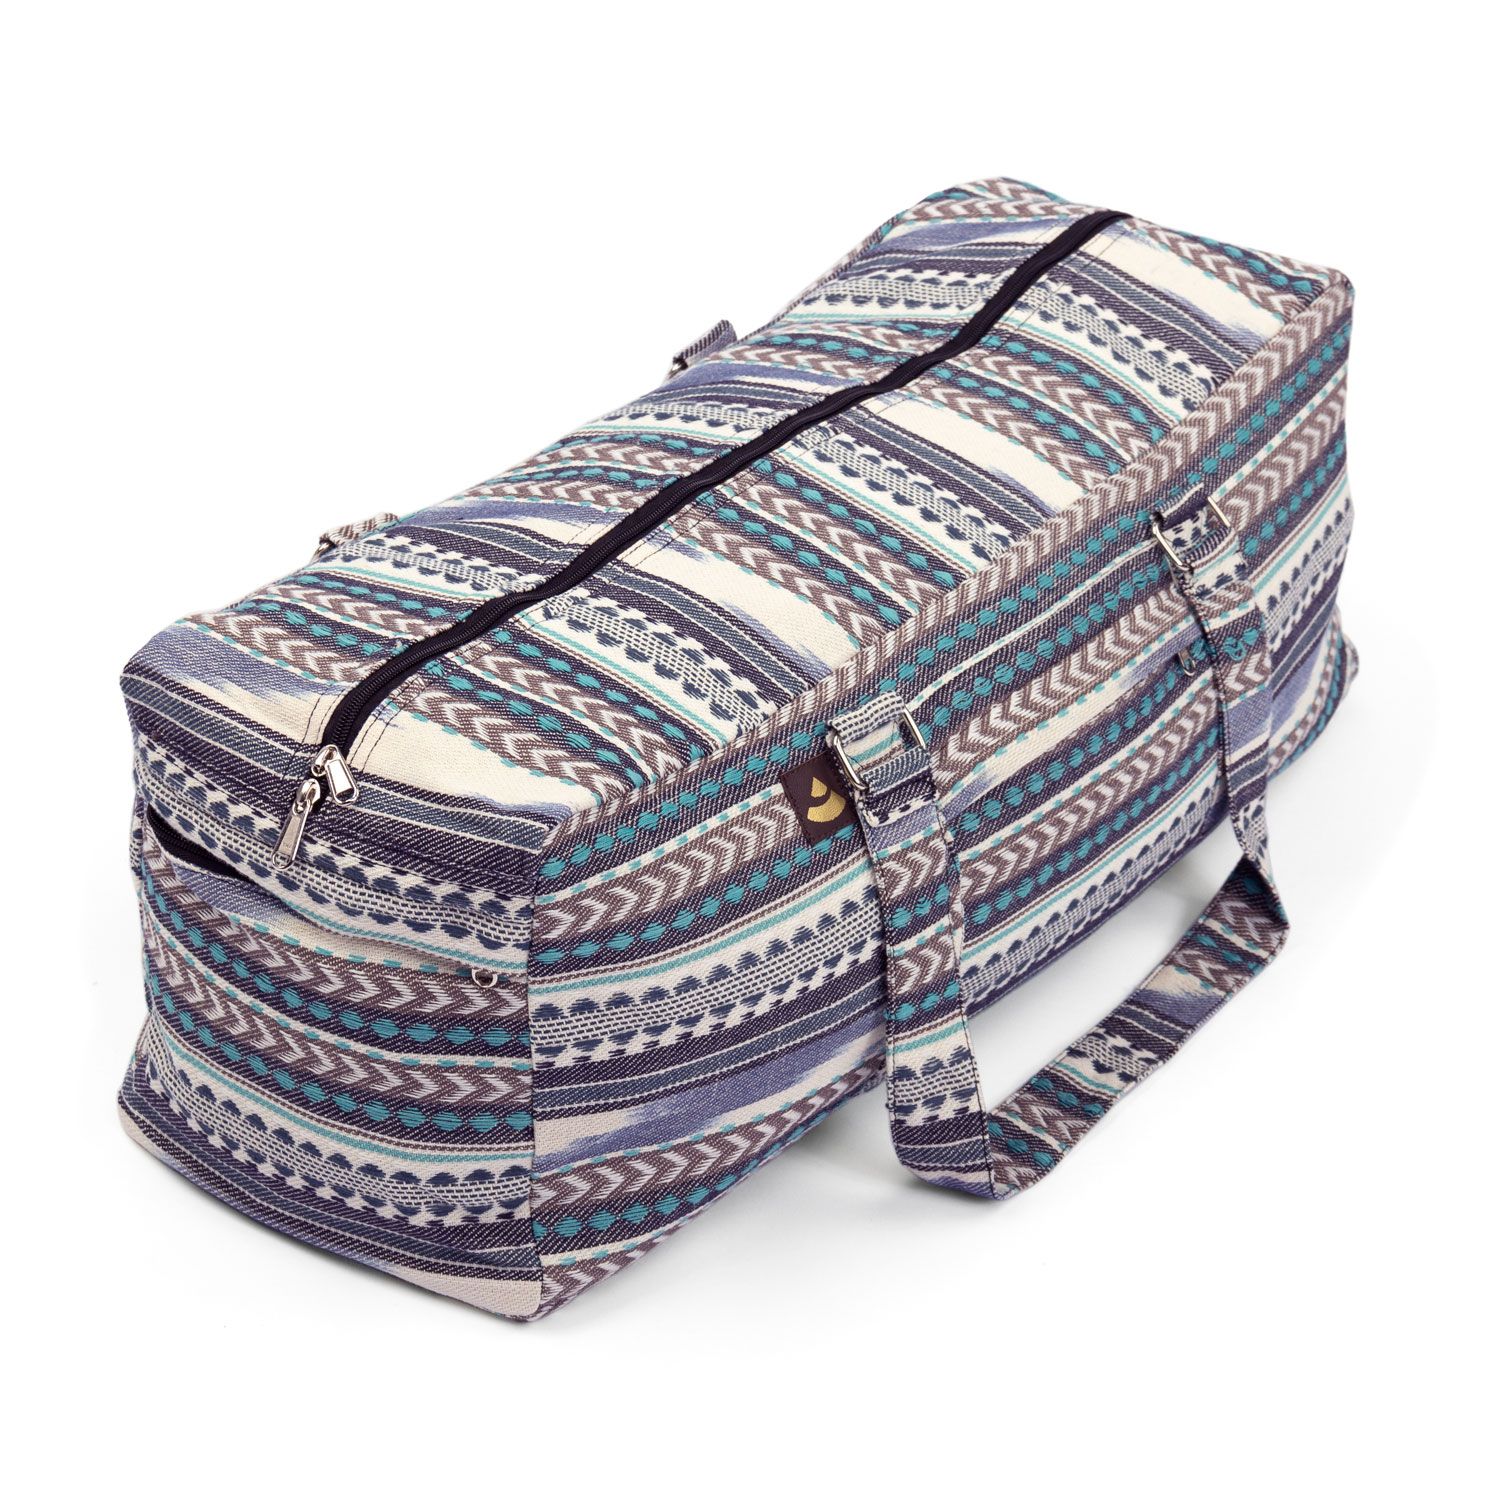 ETHNO Collection: Yoga Kit Bag Ikat-Webstoff, schwarz-weiß-blau gemustert